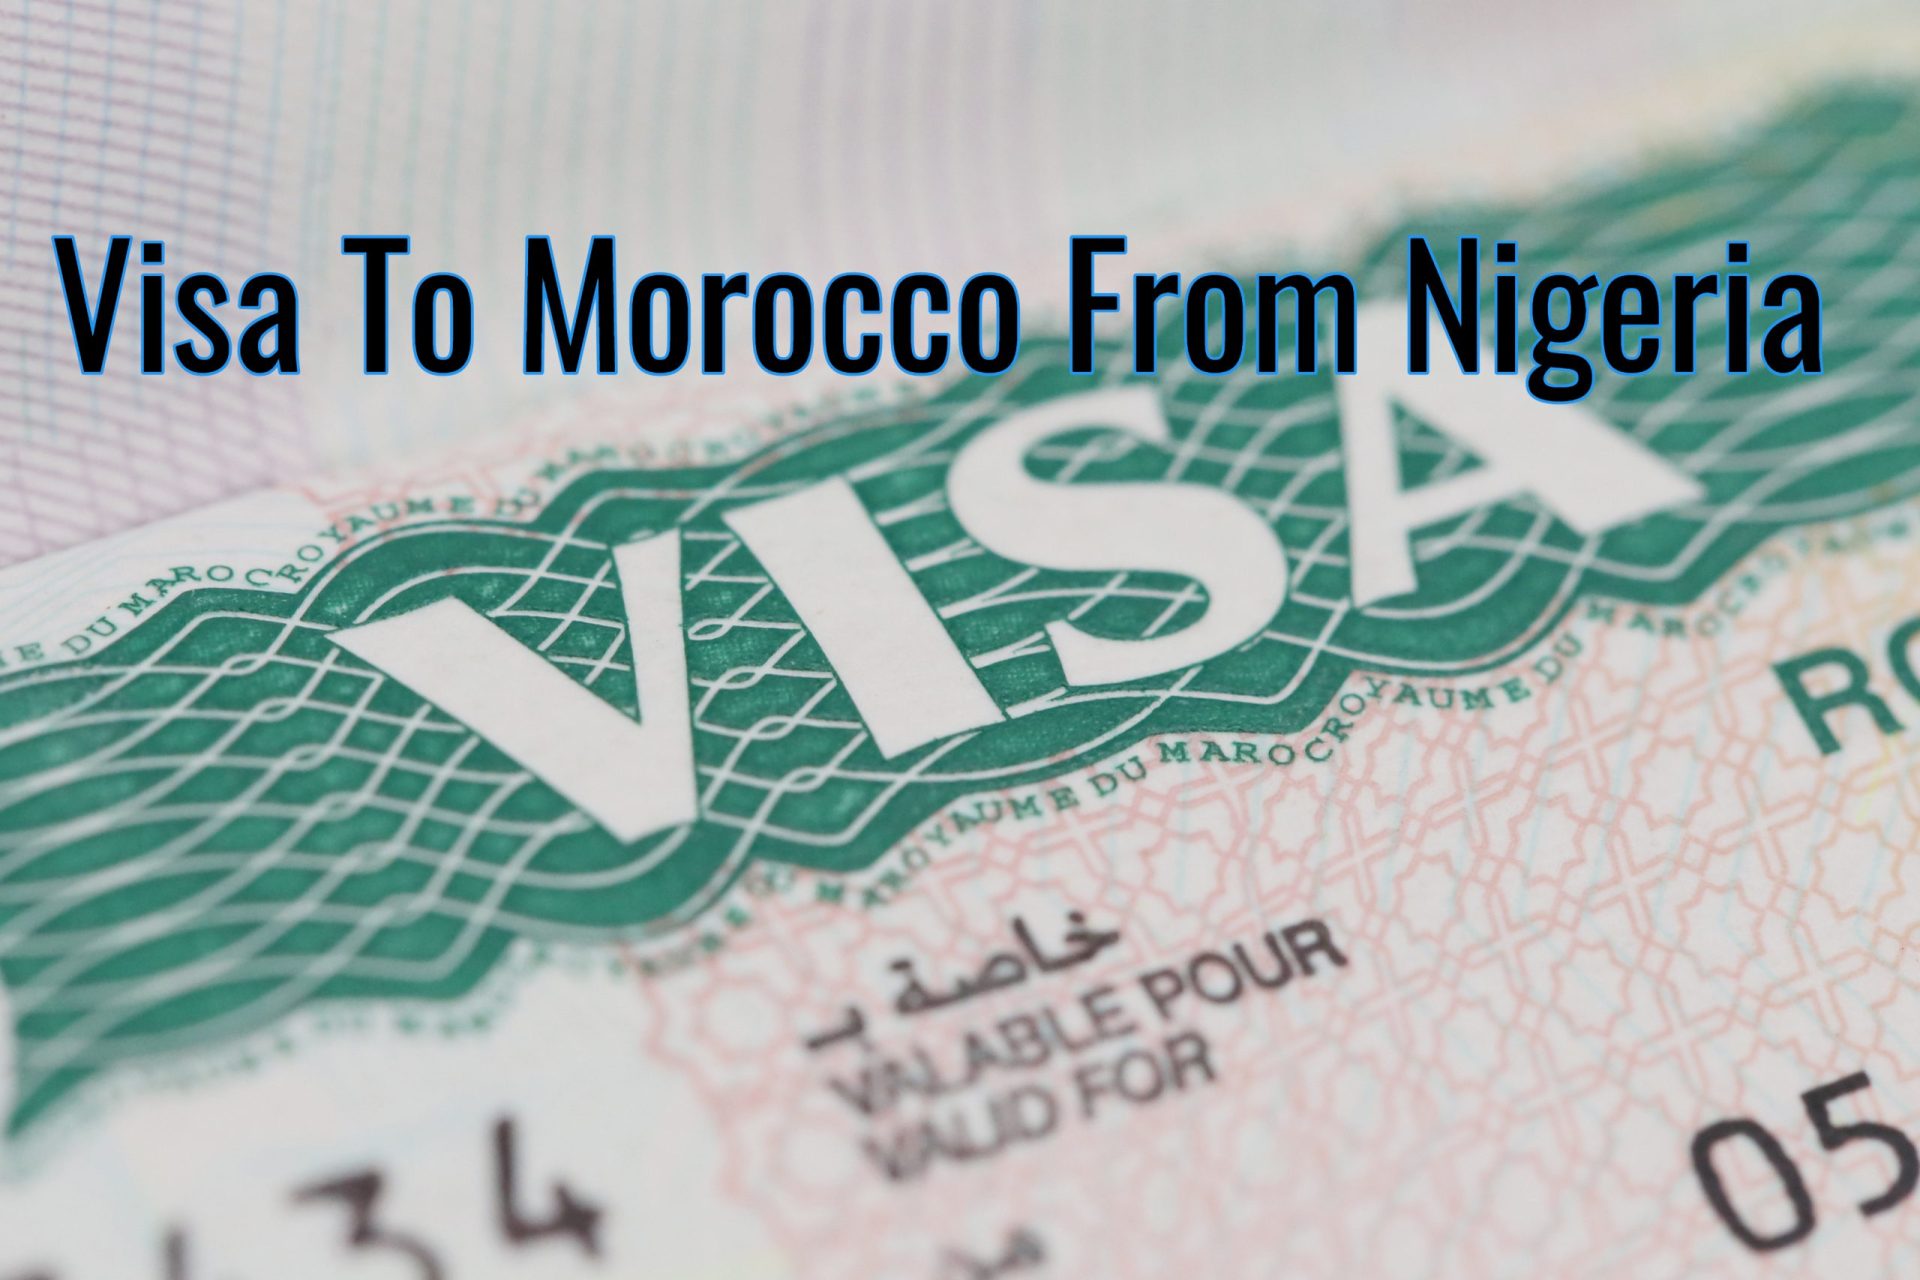 Morocco visa requirements for Nigeria